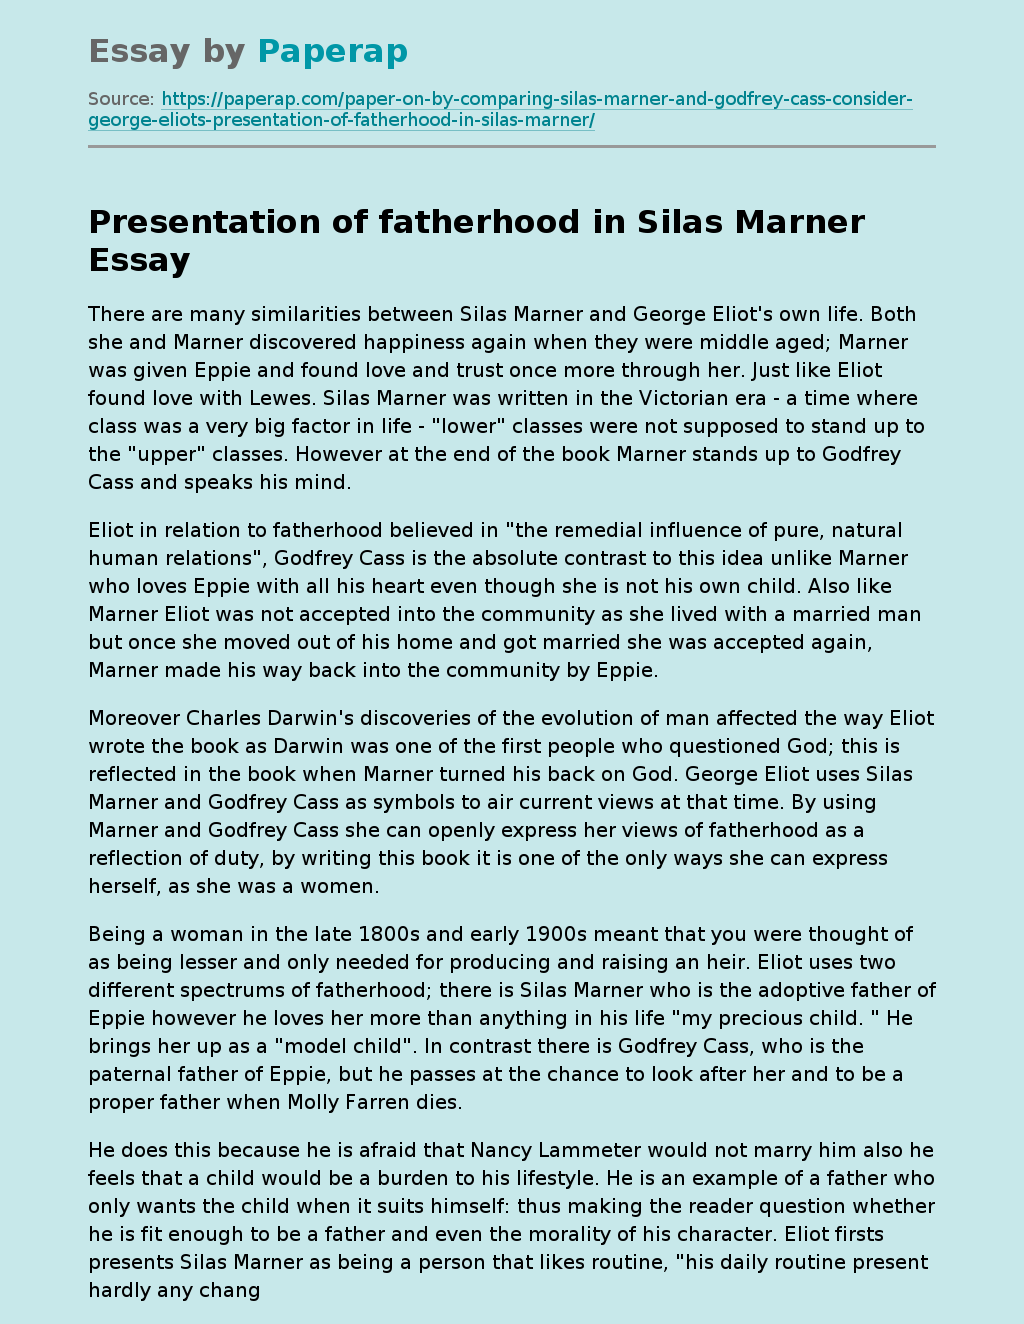 Presentation of fatherhood in Silas Marner